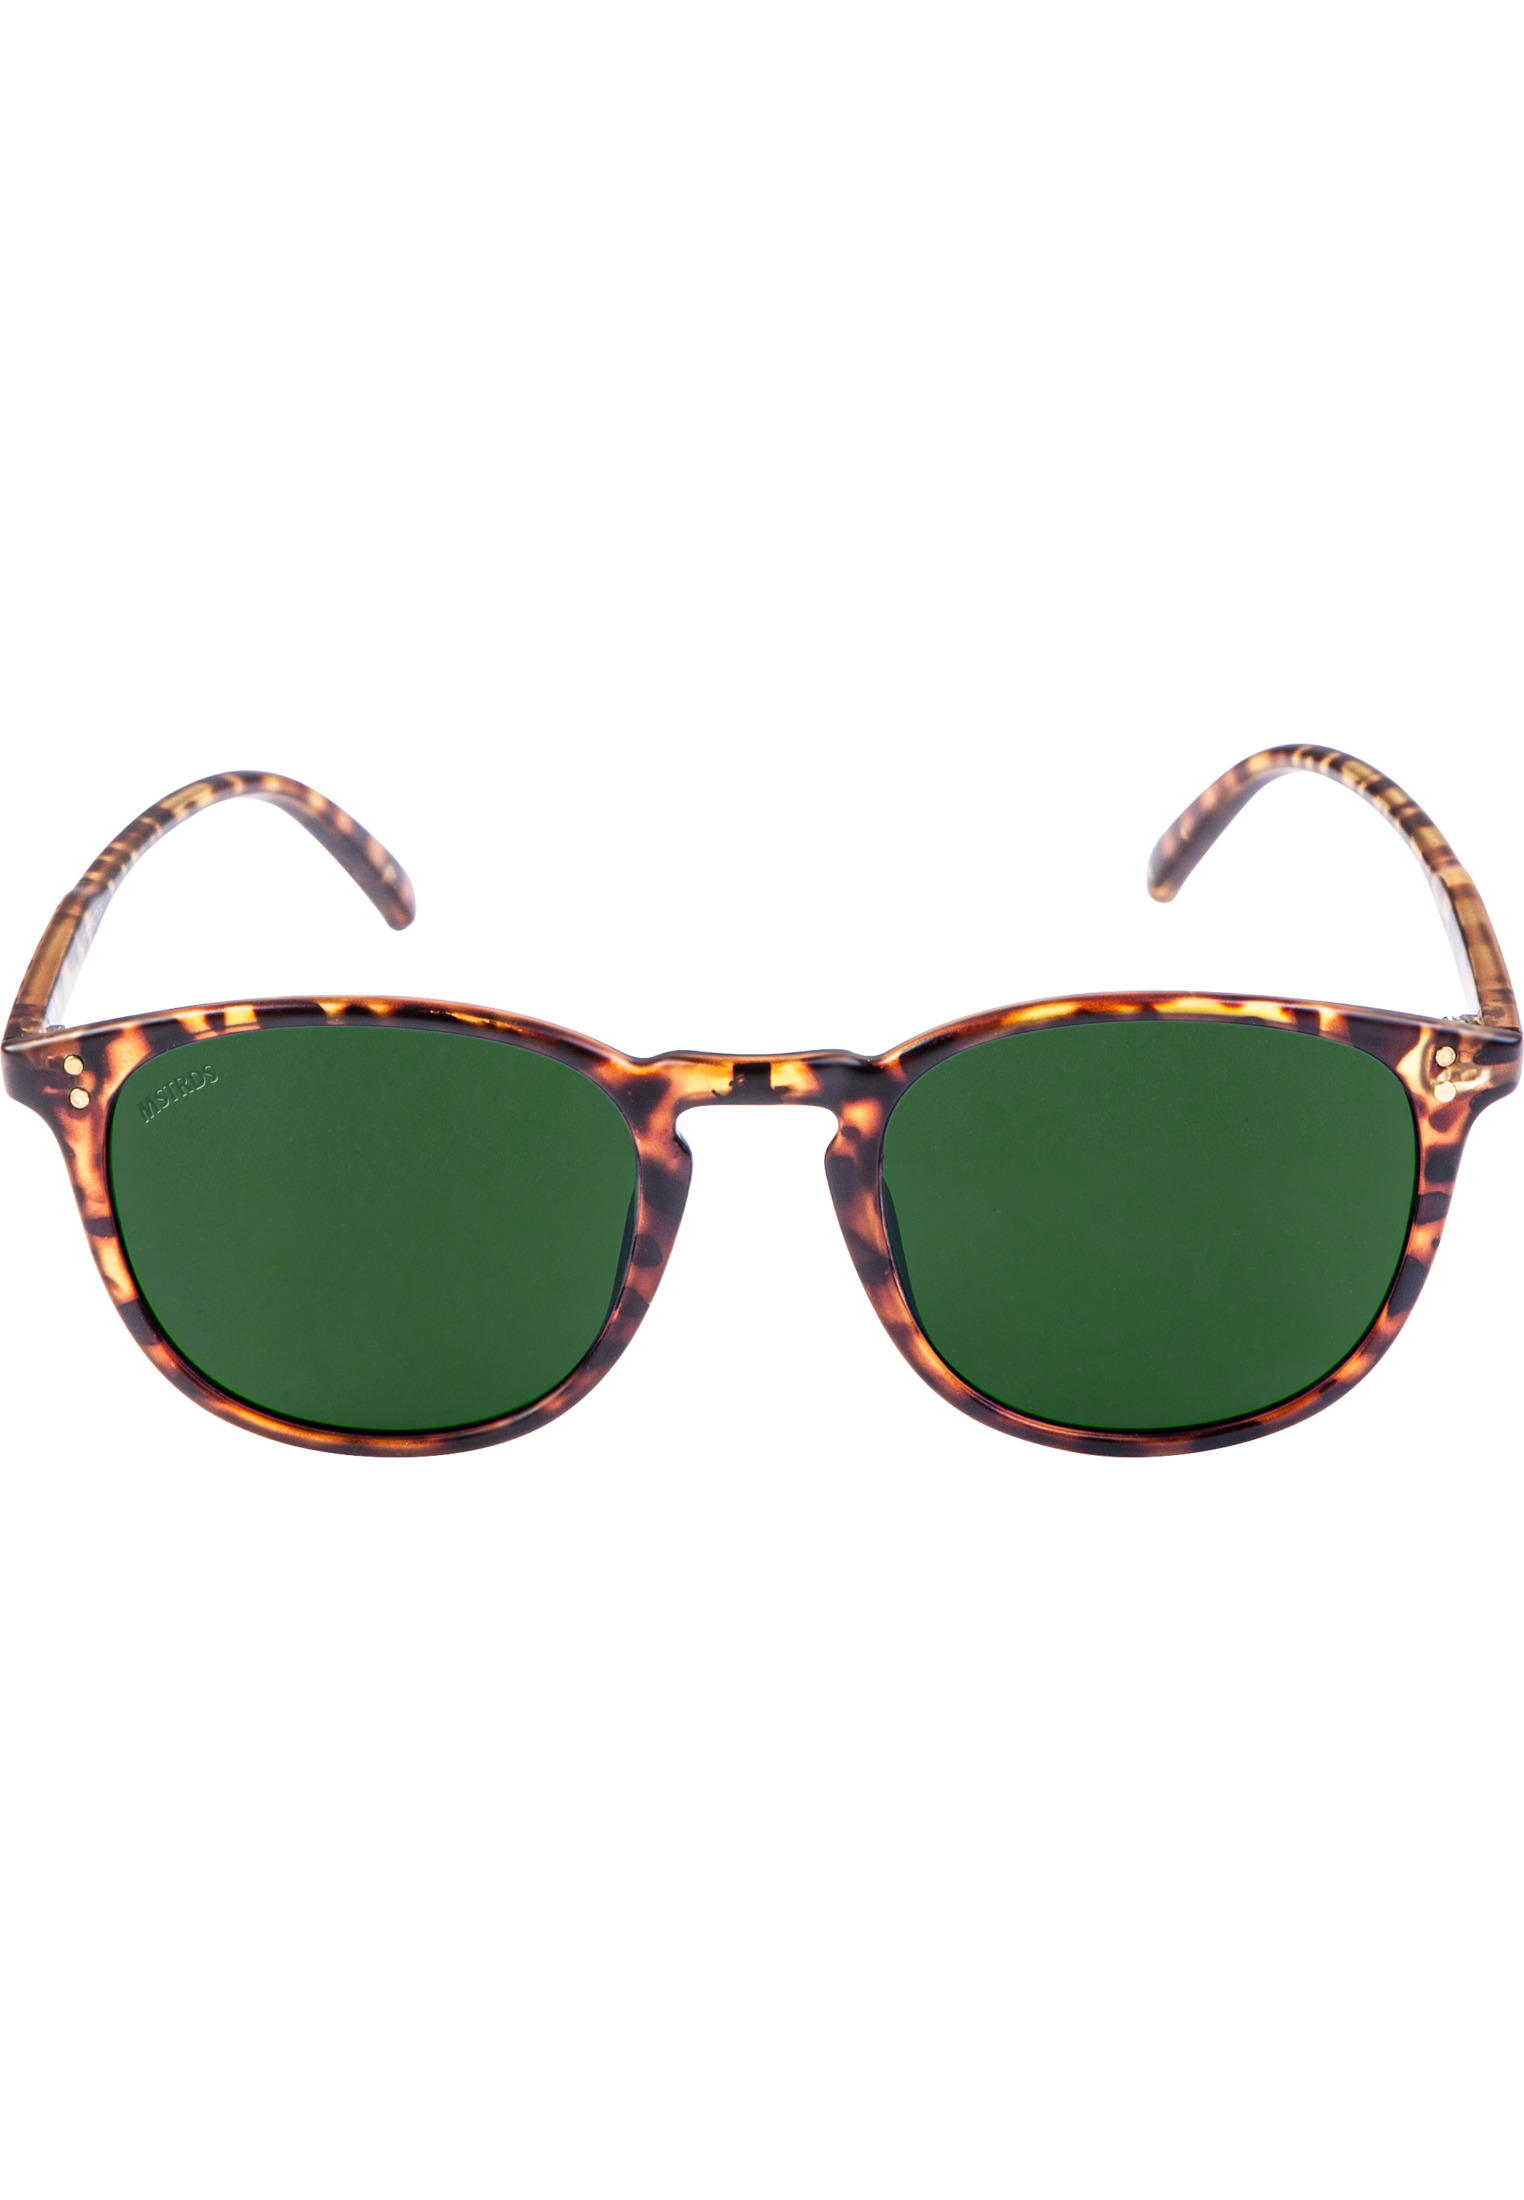 Sunglasses Arthur havanna/green